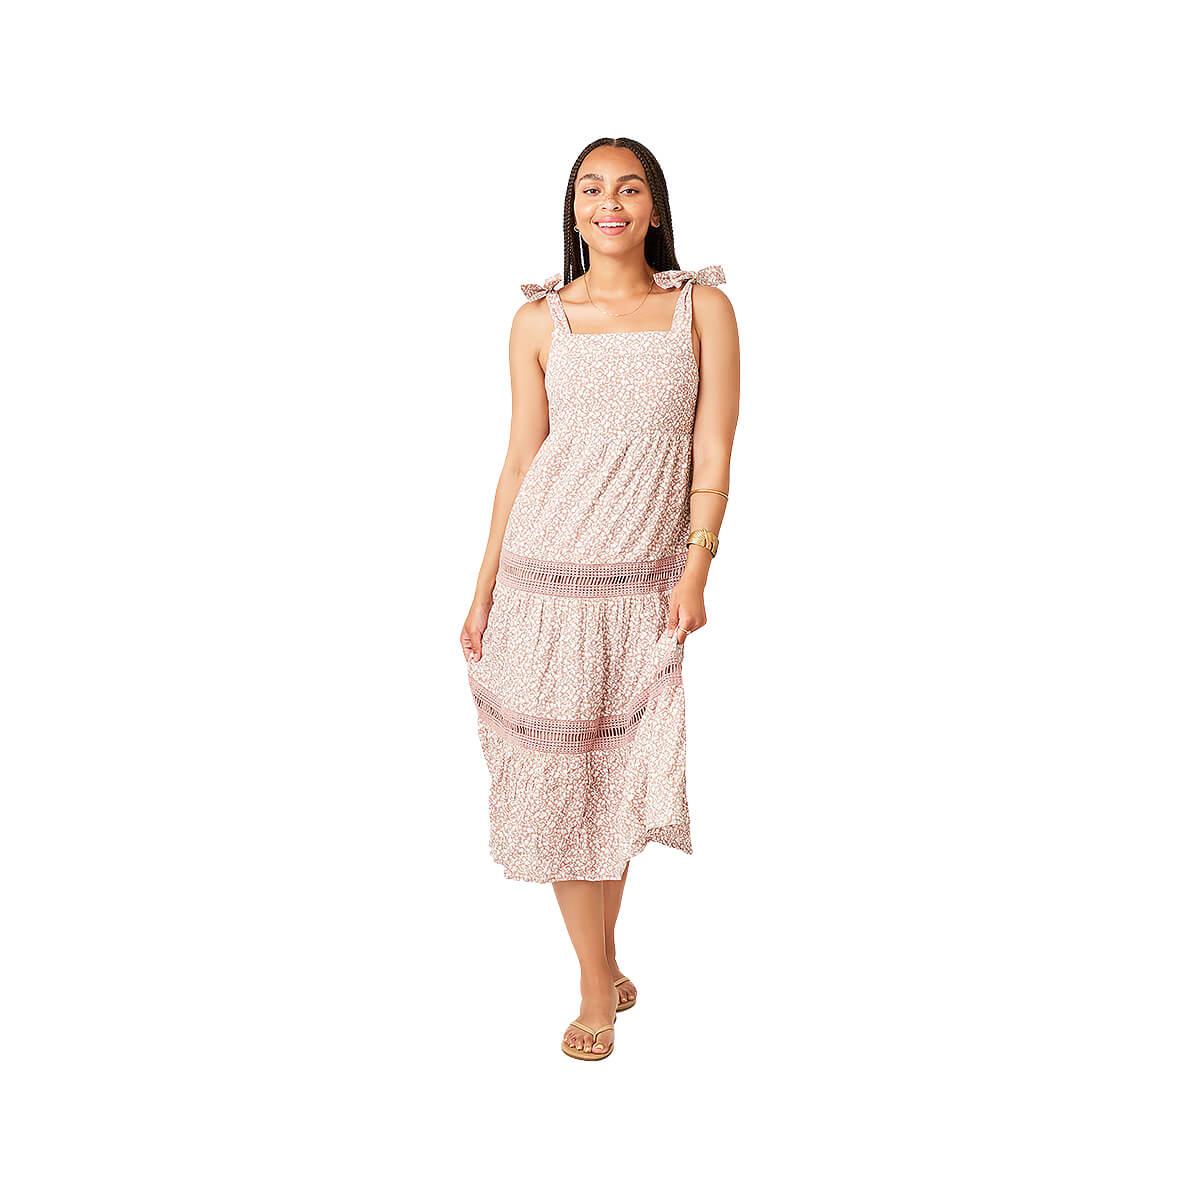  Women's Kiera Sleeveless Dress